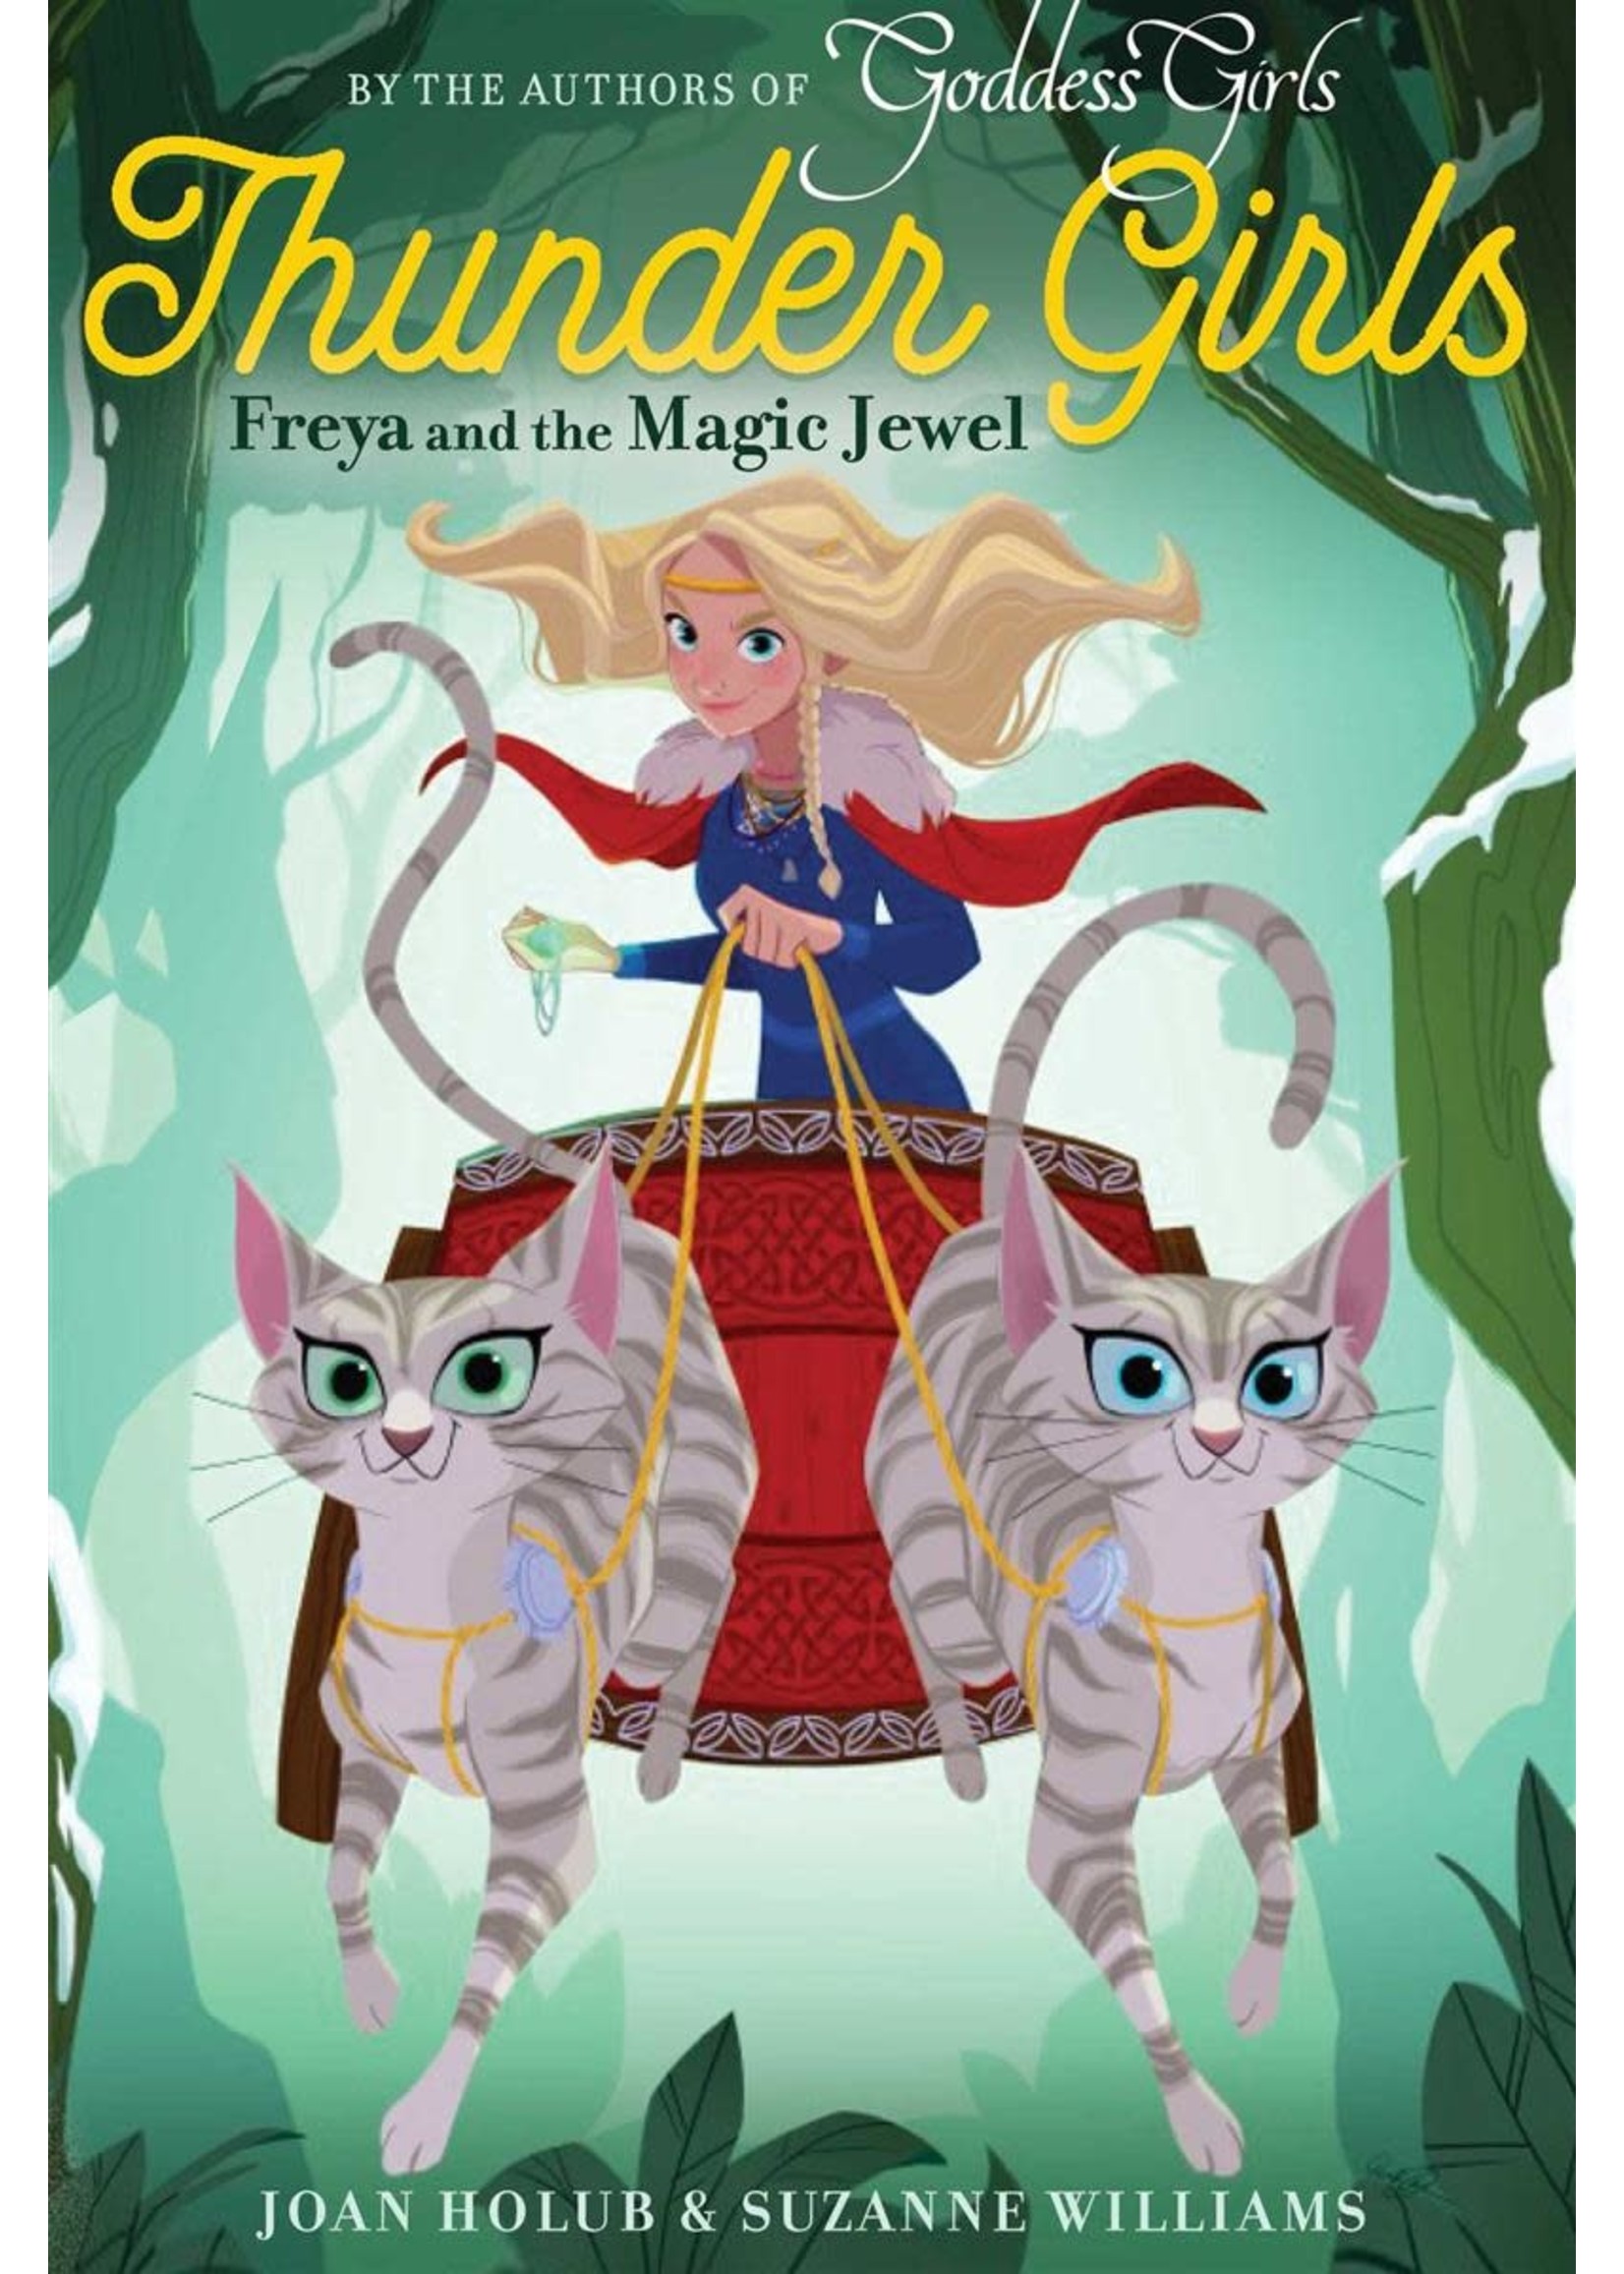 Freya and the Magic Jewel (Thunder Girls #1) by Joan Holub, Suzanne Williams